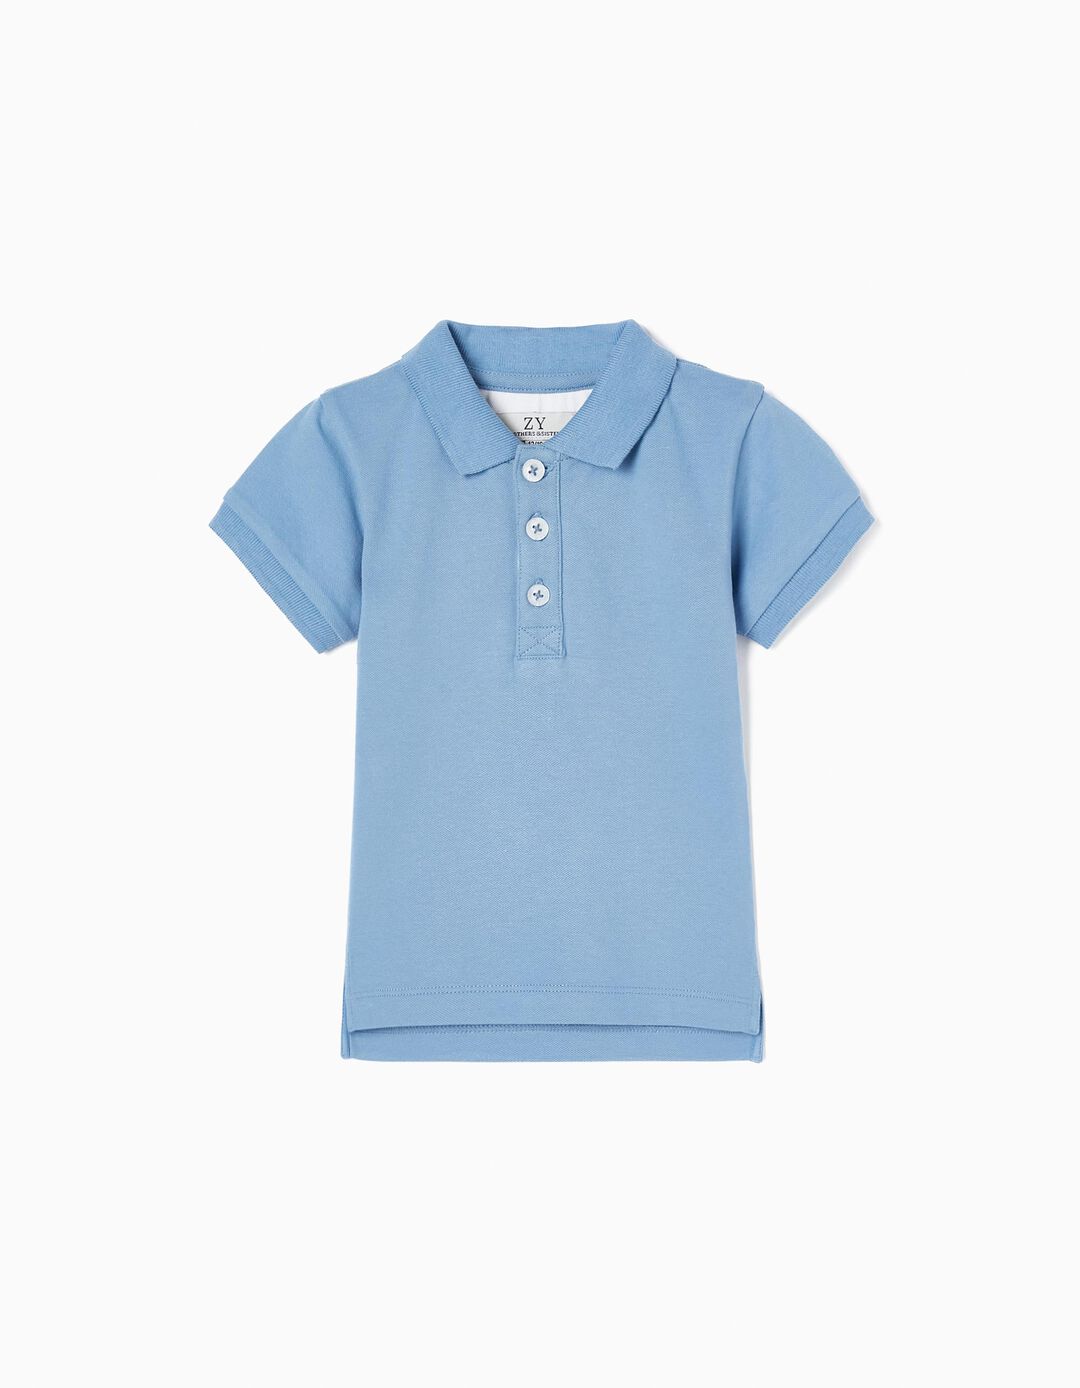 Cotton Polo Shirt for Baby Boys 'You&Me', Blue